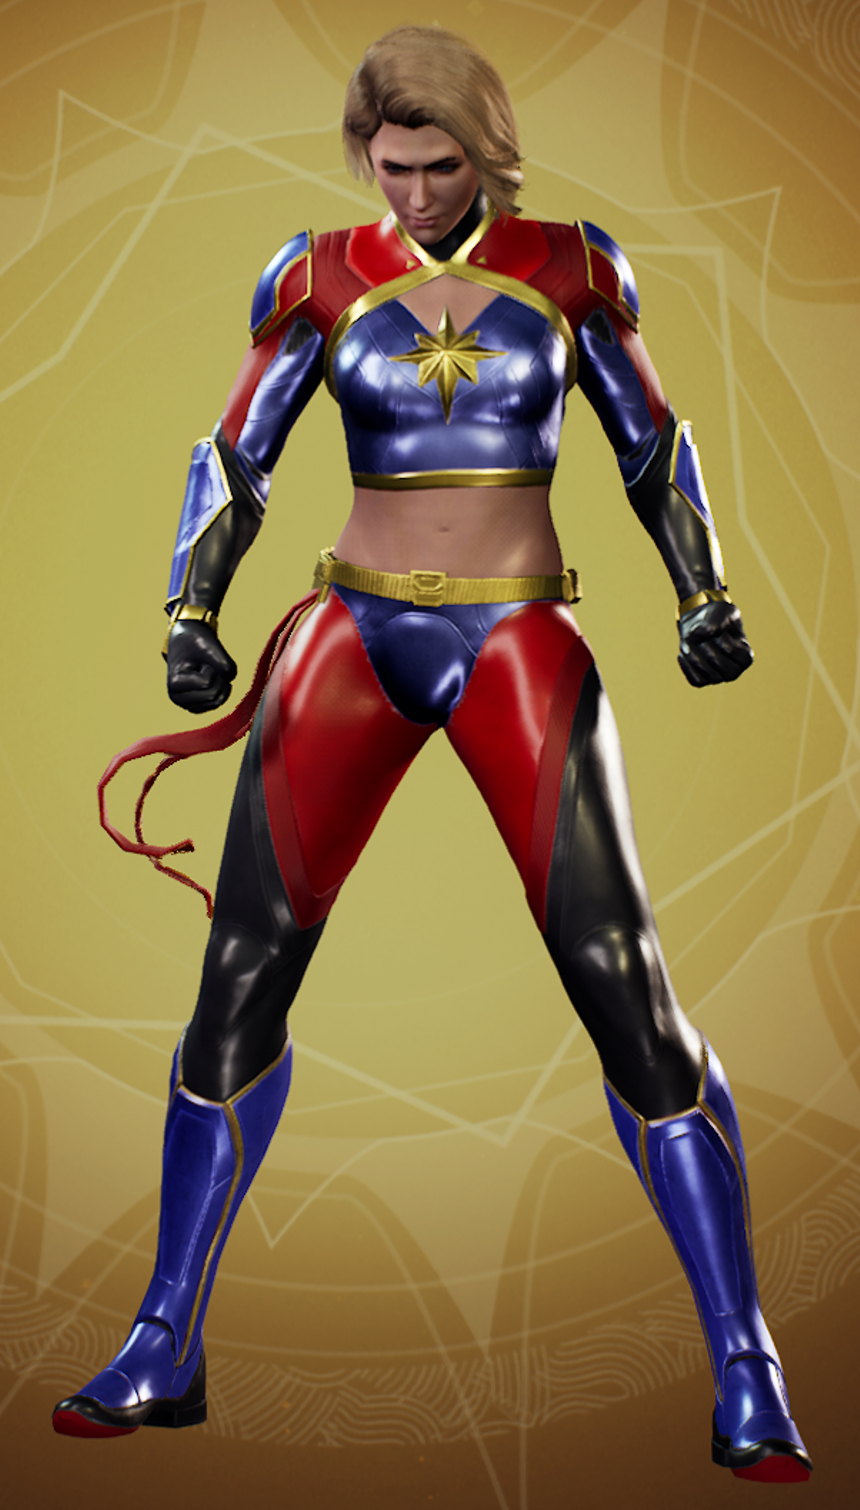 Ms. Marvel costume skin by peek6 : r/midnightsuns